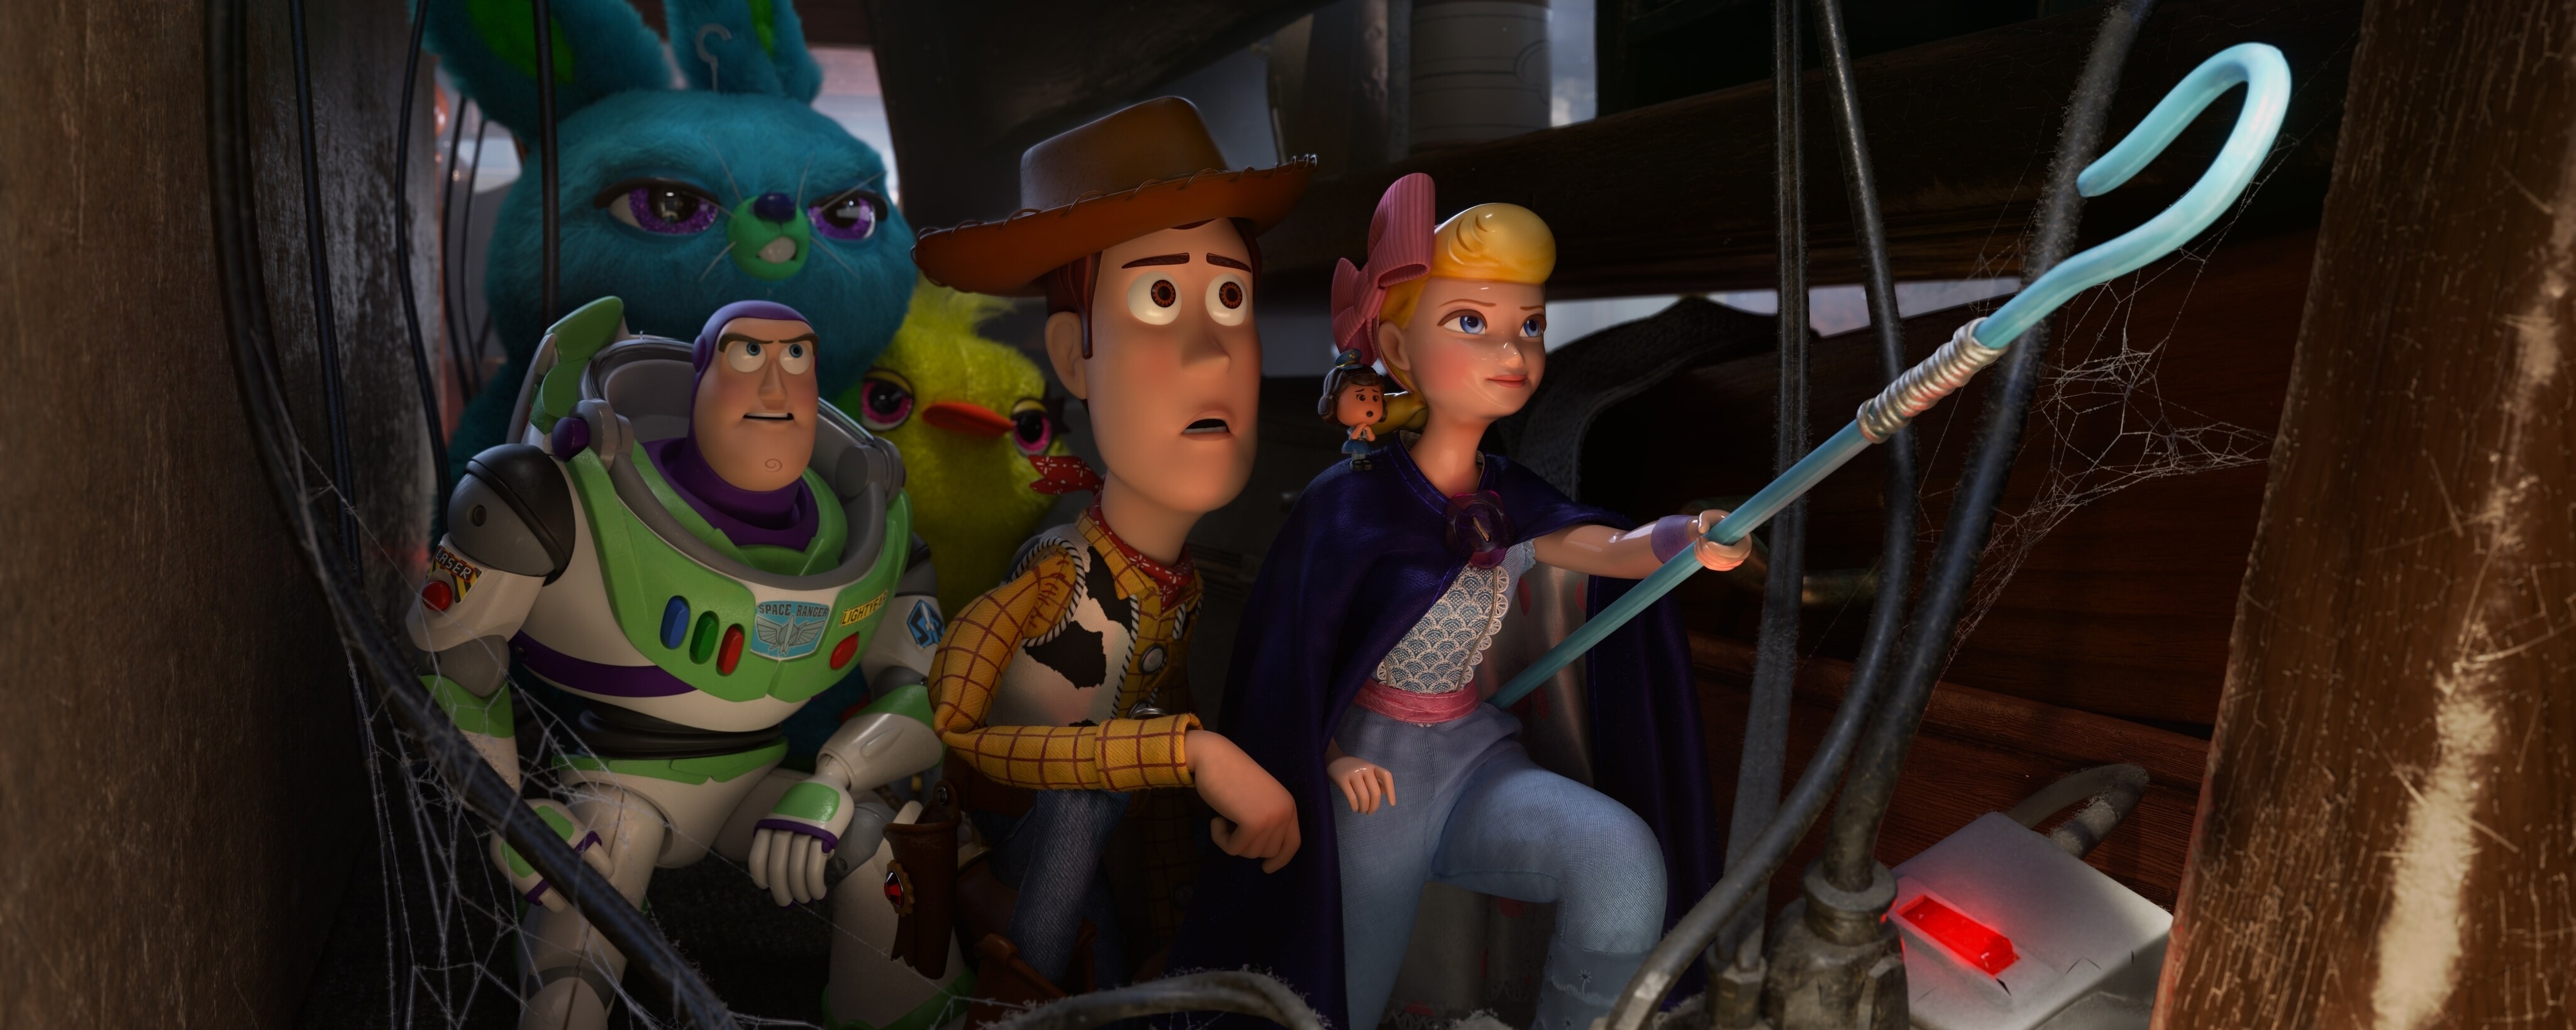 Oscars®: Toy Story 4 nominada a mejor película animada 